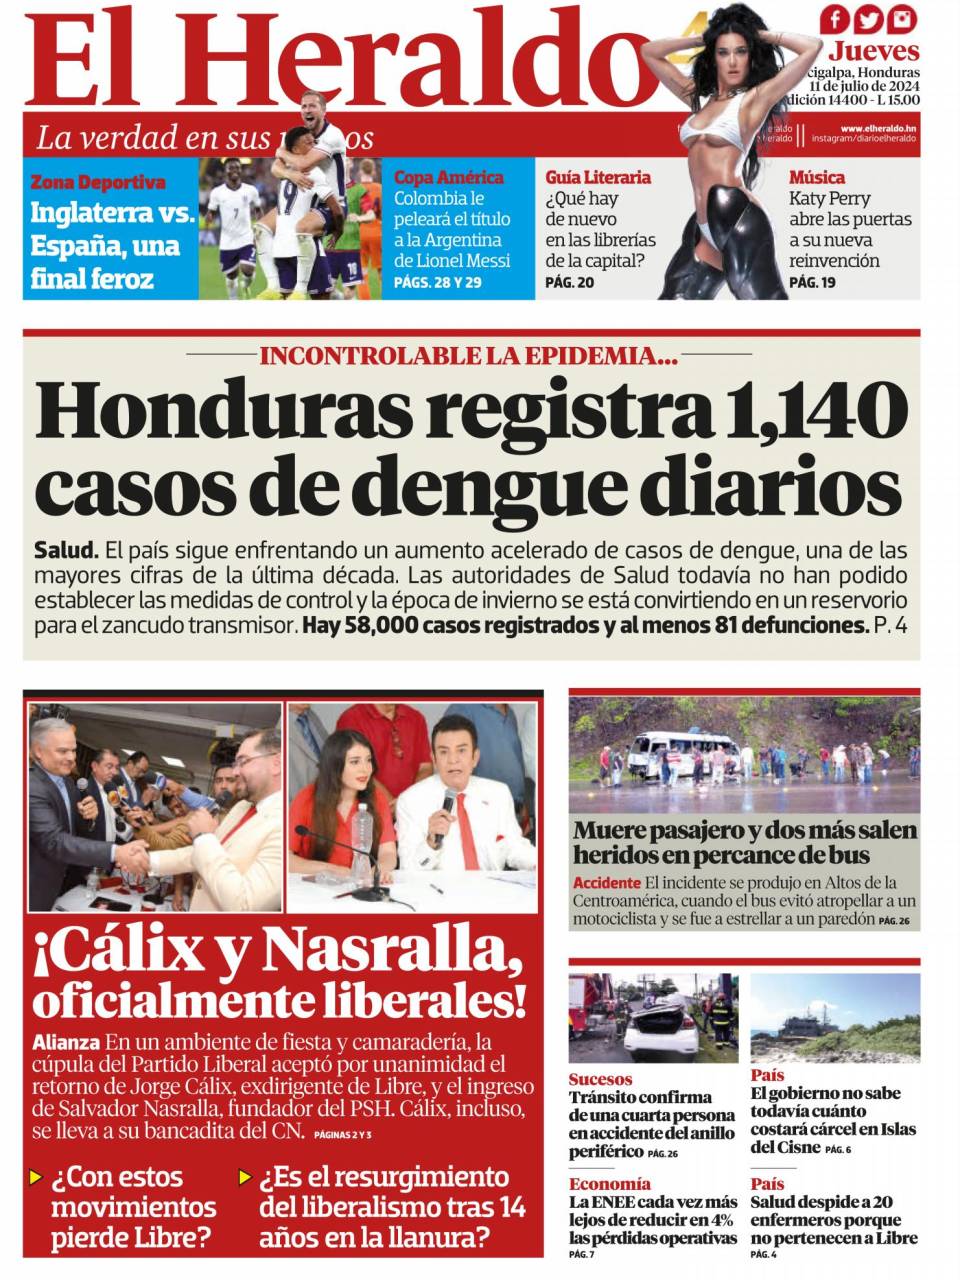 Honduras registra 1,140 casos de dengue diarios